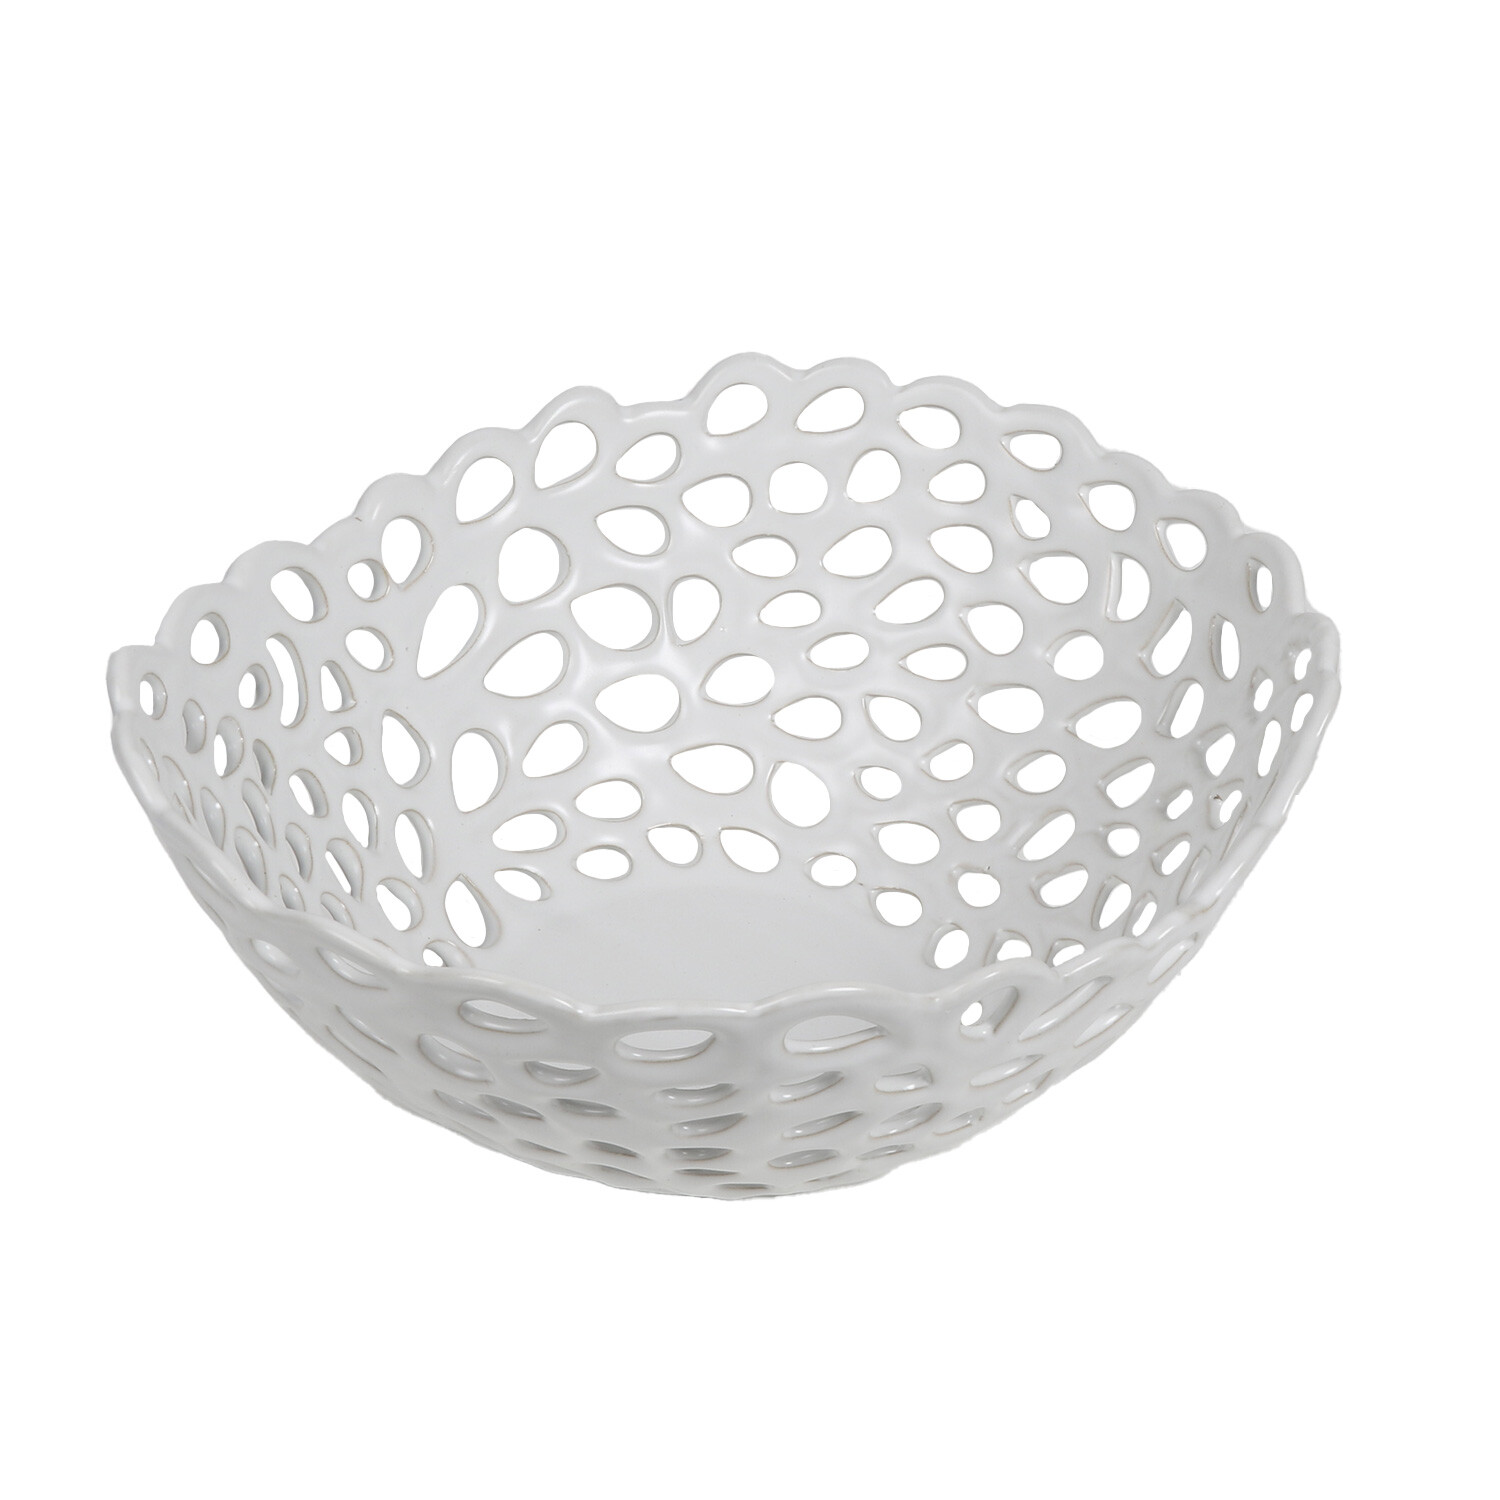 Cut-Out White Ceramic Bowl Image 2